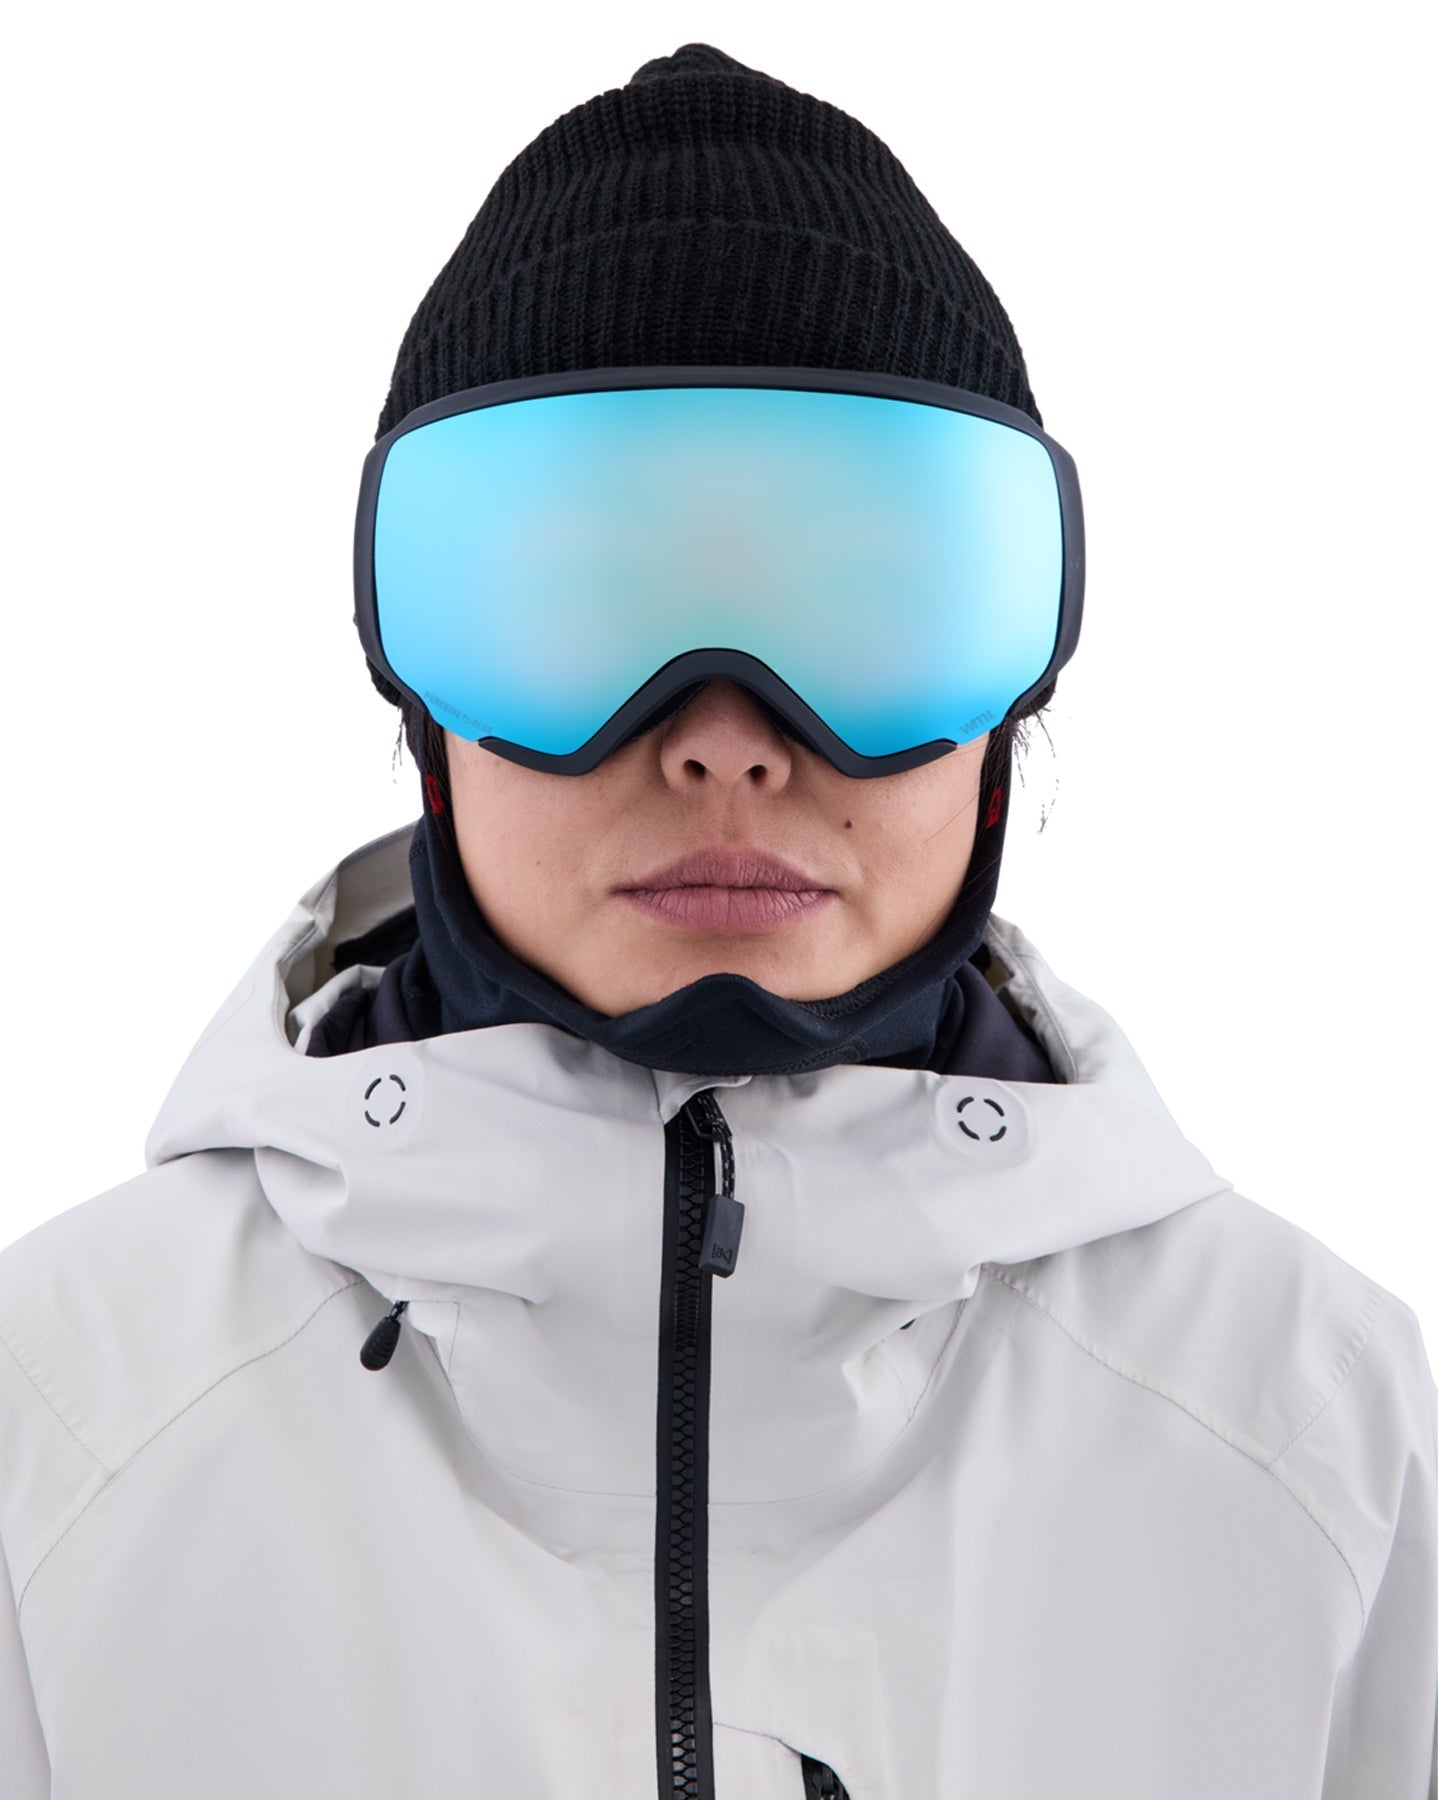 Anon WM1 Snow Goggles + Bonus Lens + MFI - Black / Perceive Variable Blue Women's Snow Goggles - SnowSkiersWarehouse